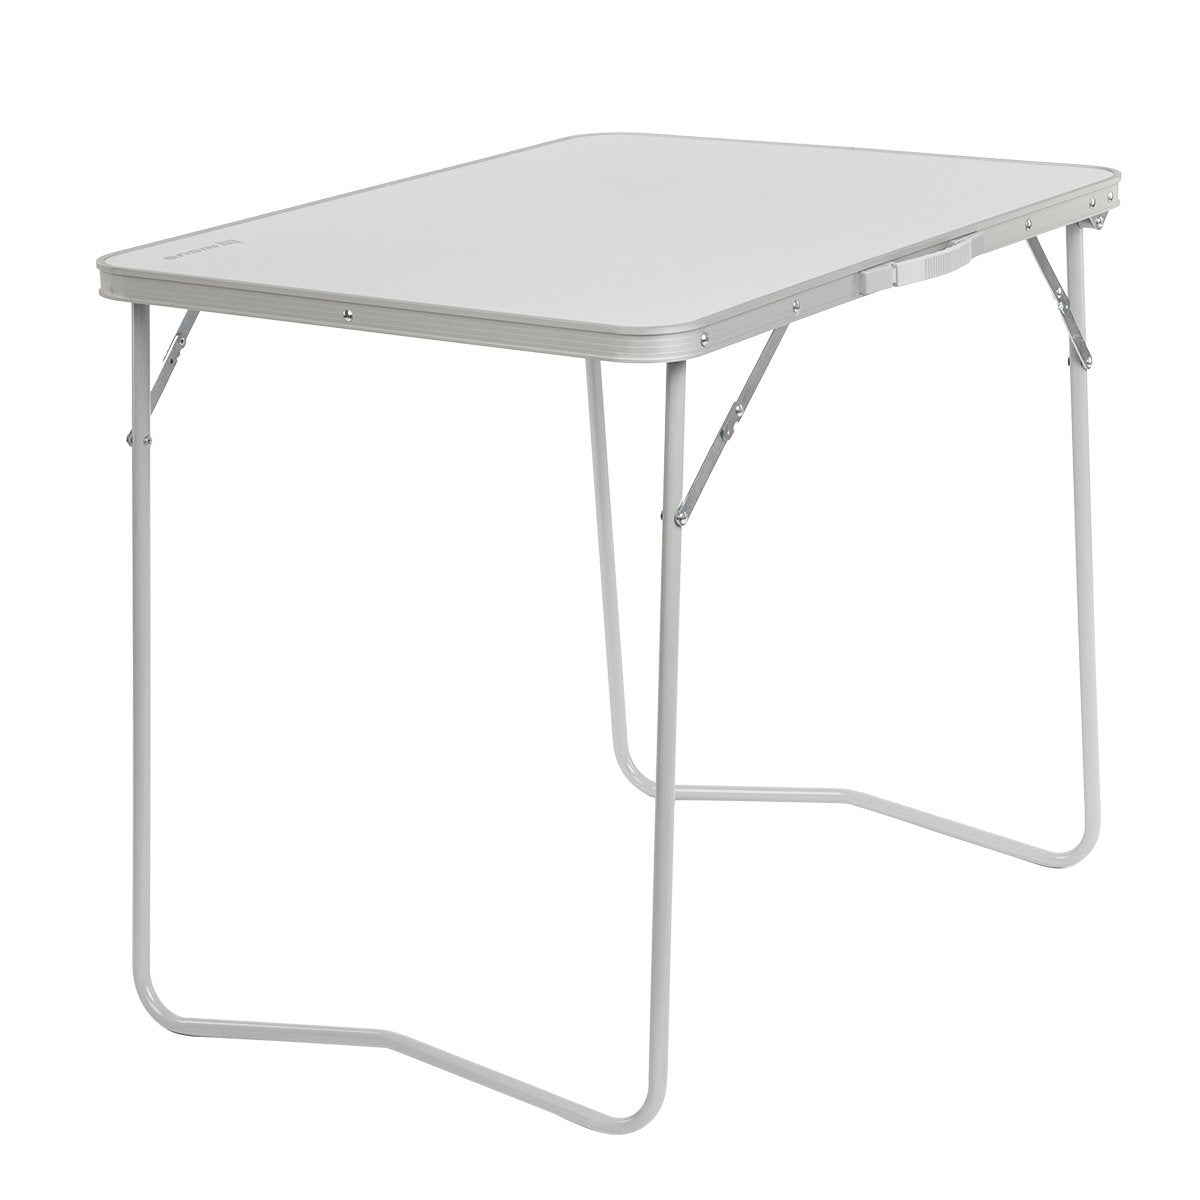 Portable Lightweight Steel Folding Outdoor Table